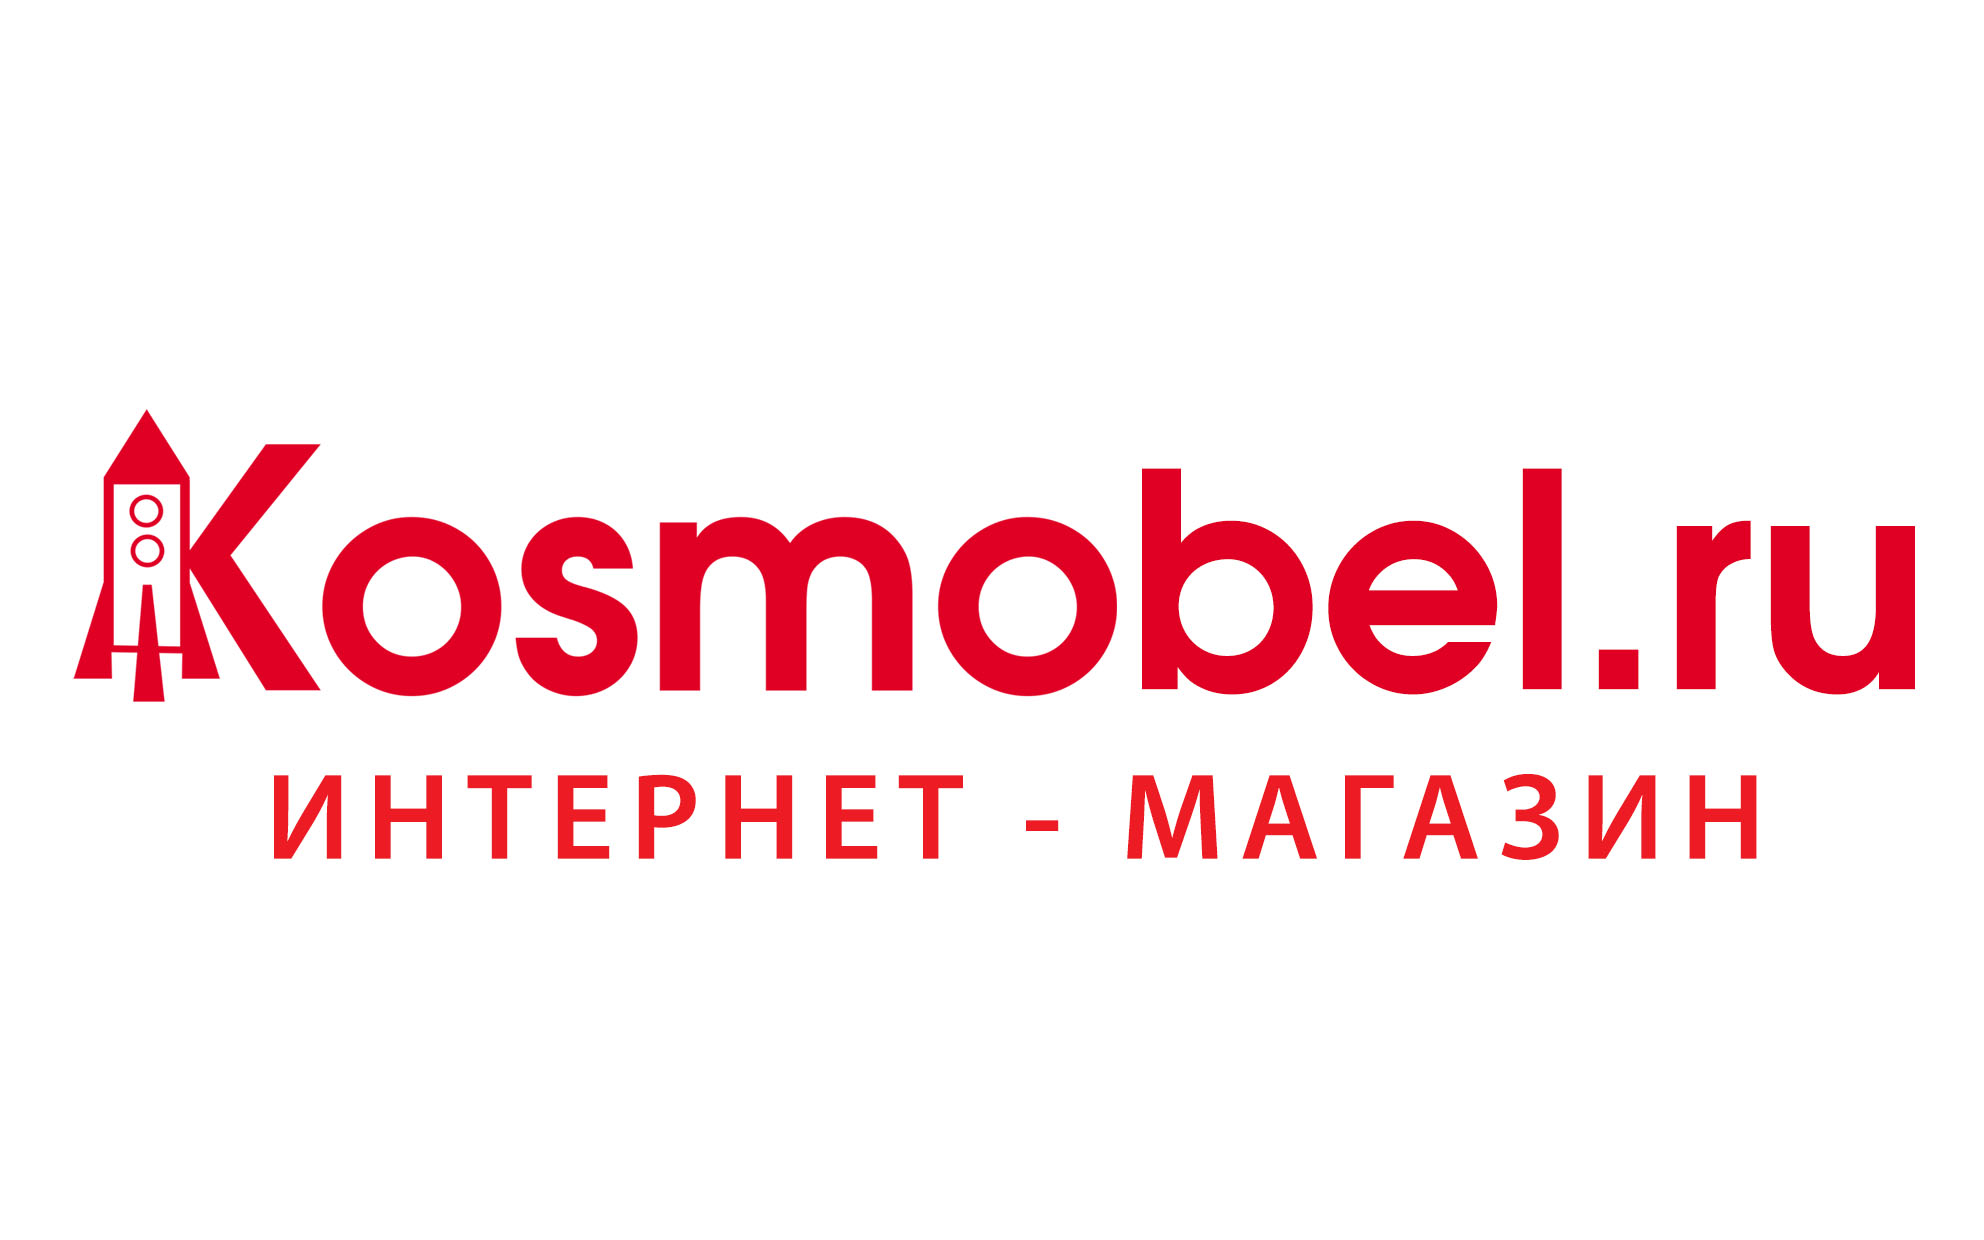 Kosmobel.ru